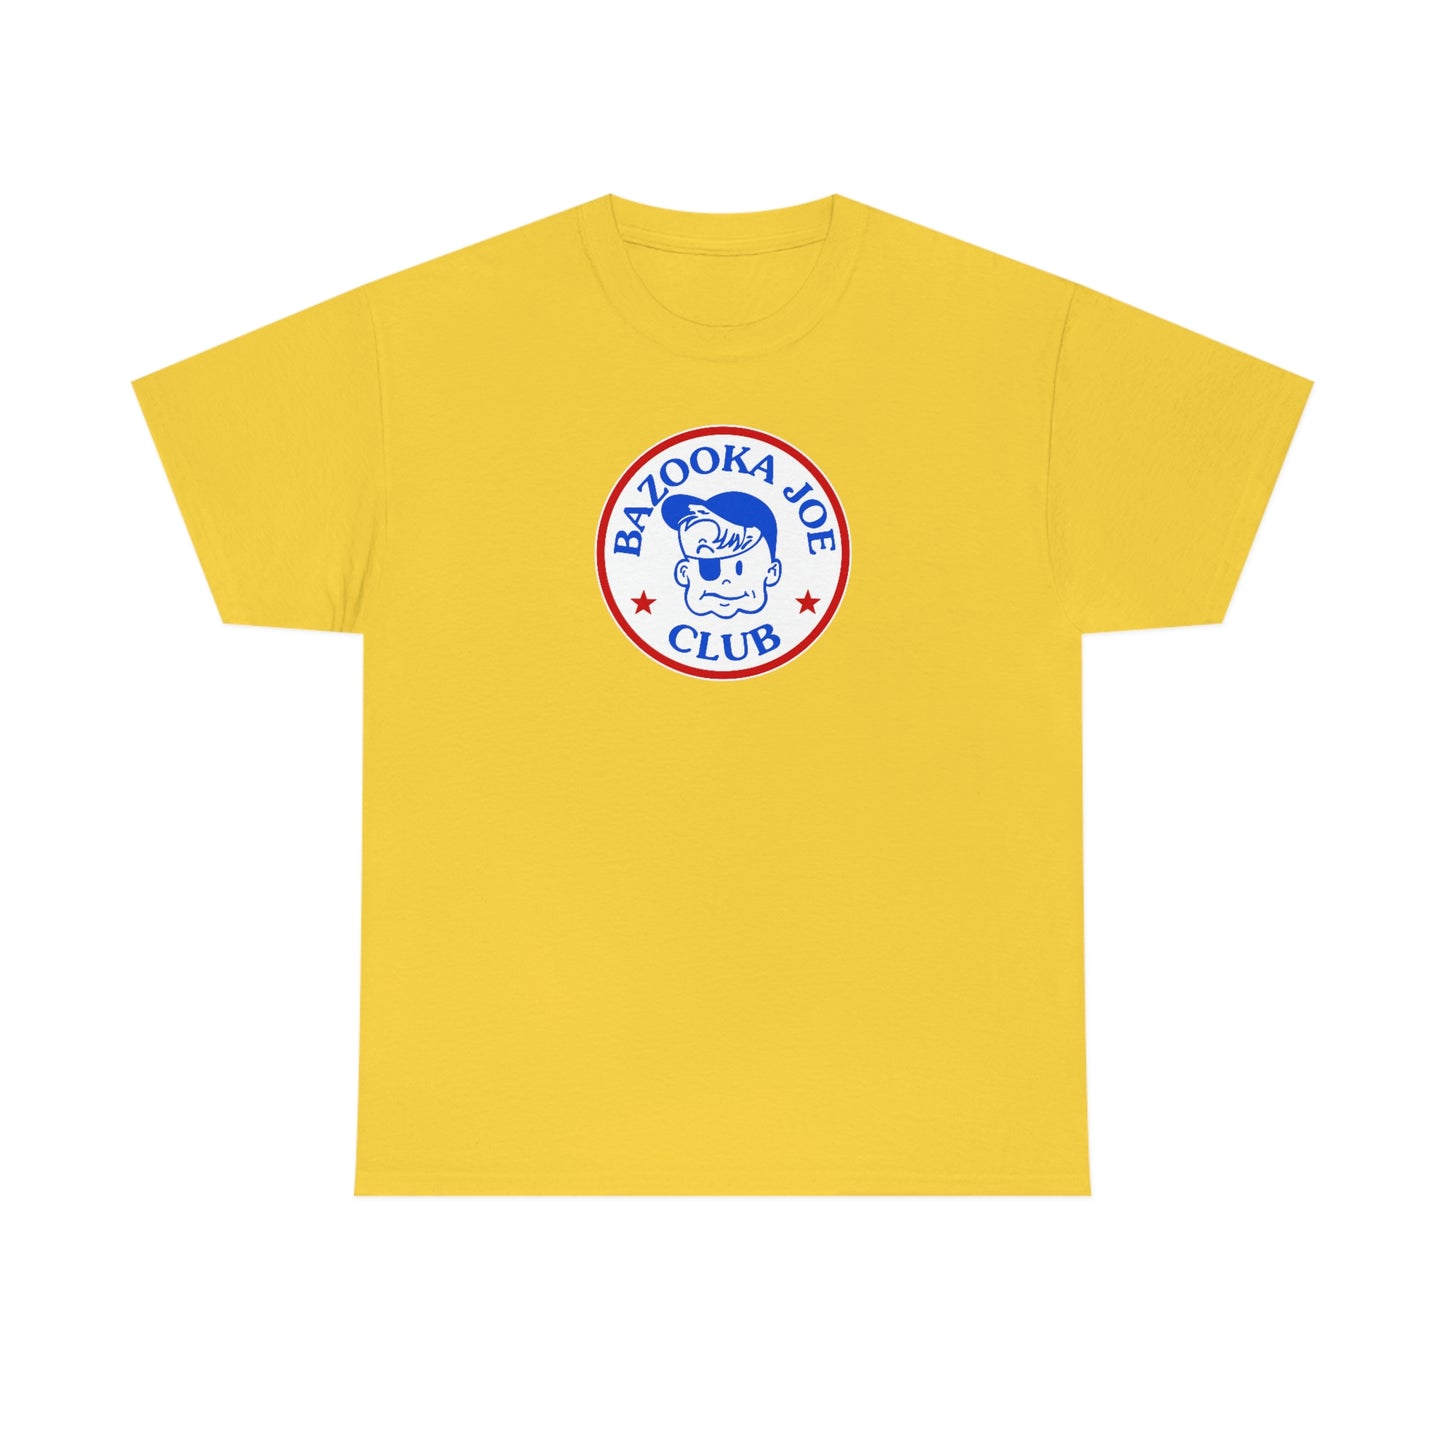 Bazooka Joe Club T-Shirt